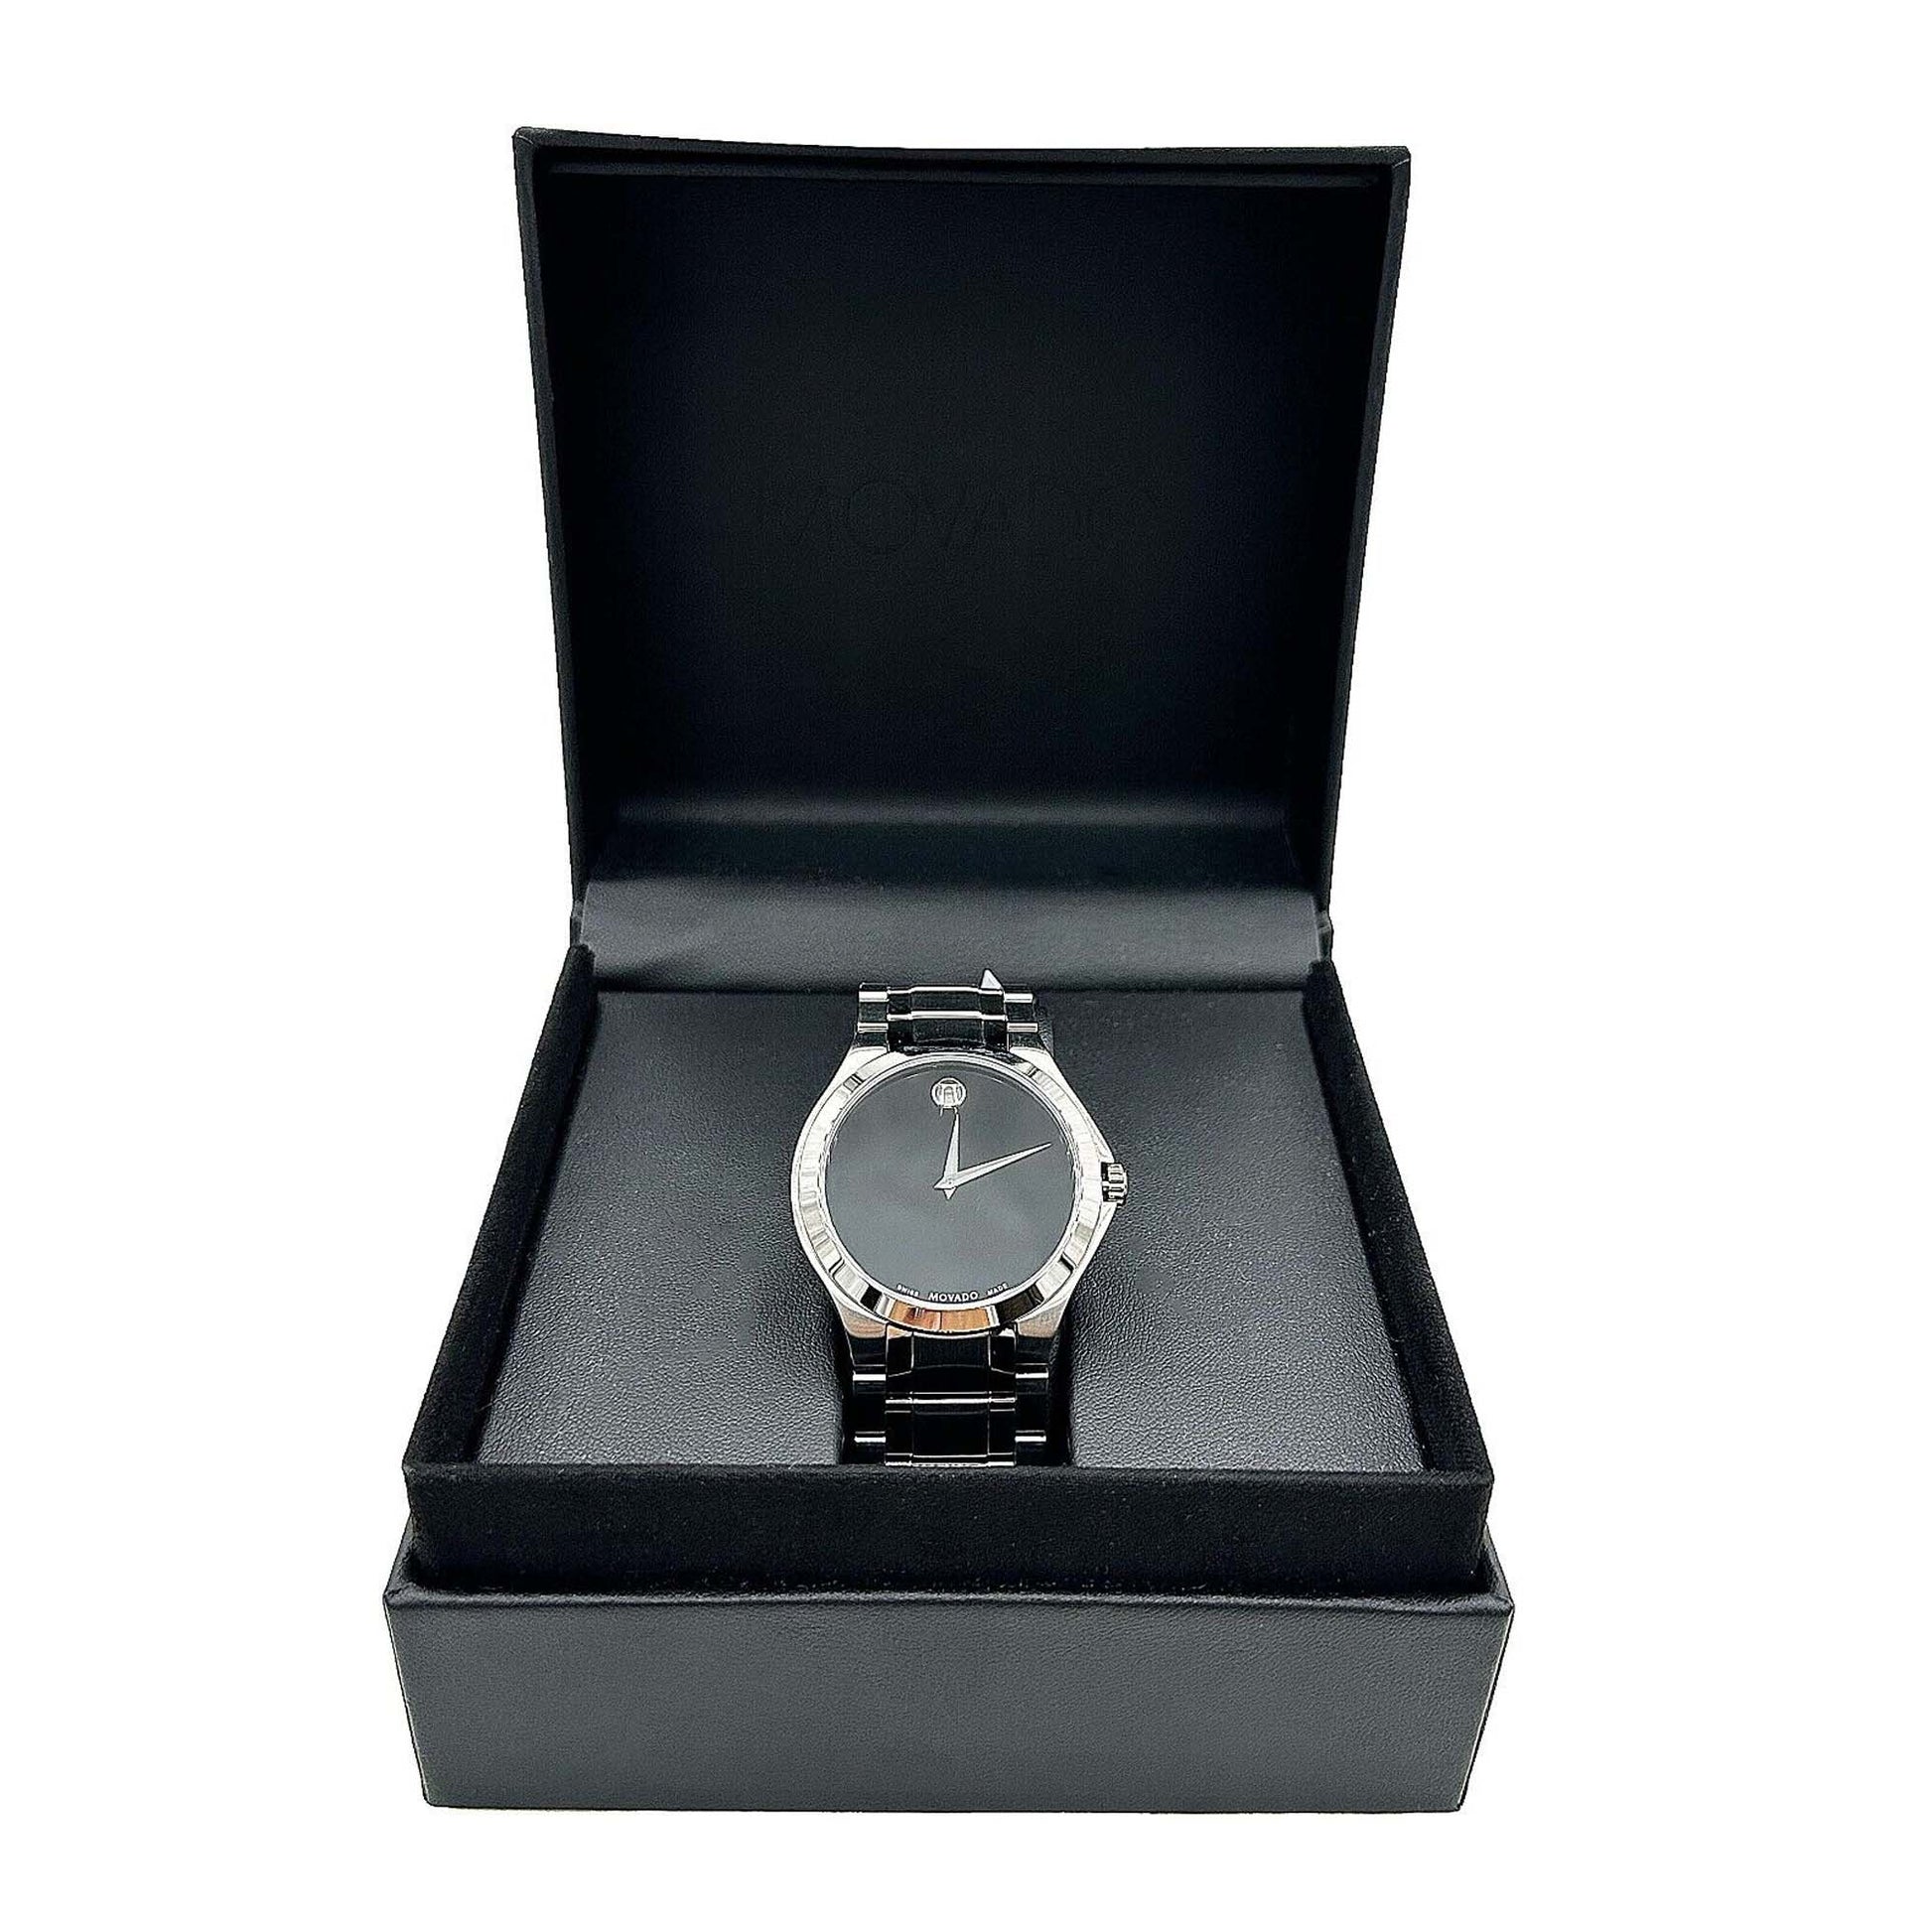 Movado Men's Swiss Made 40mm Black Dial Bracelet Watch - 0606781 - 885997108966